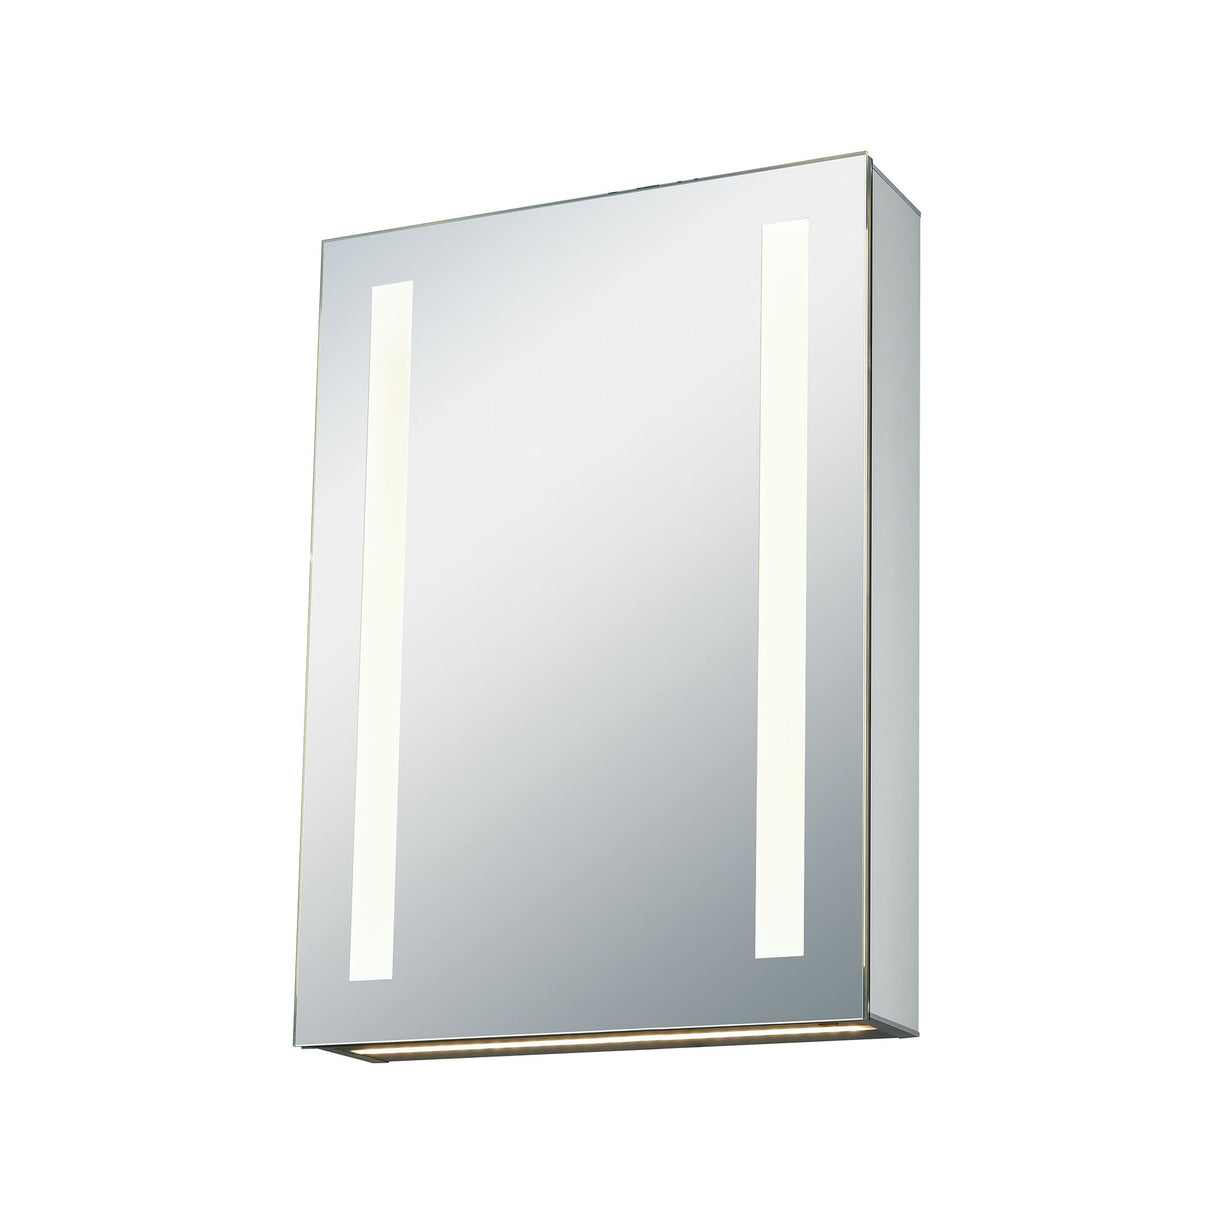 Elk LMC3K-2027-PL2 20x27-inch LED Mirrored Medicine Cabinet